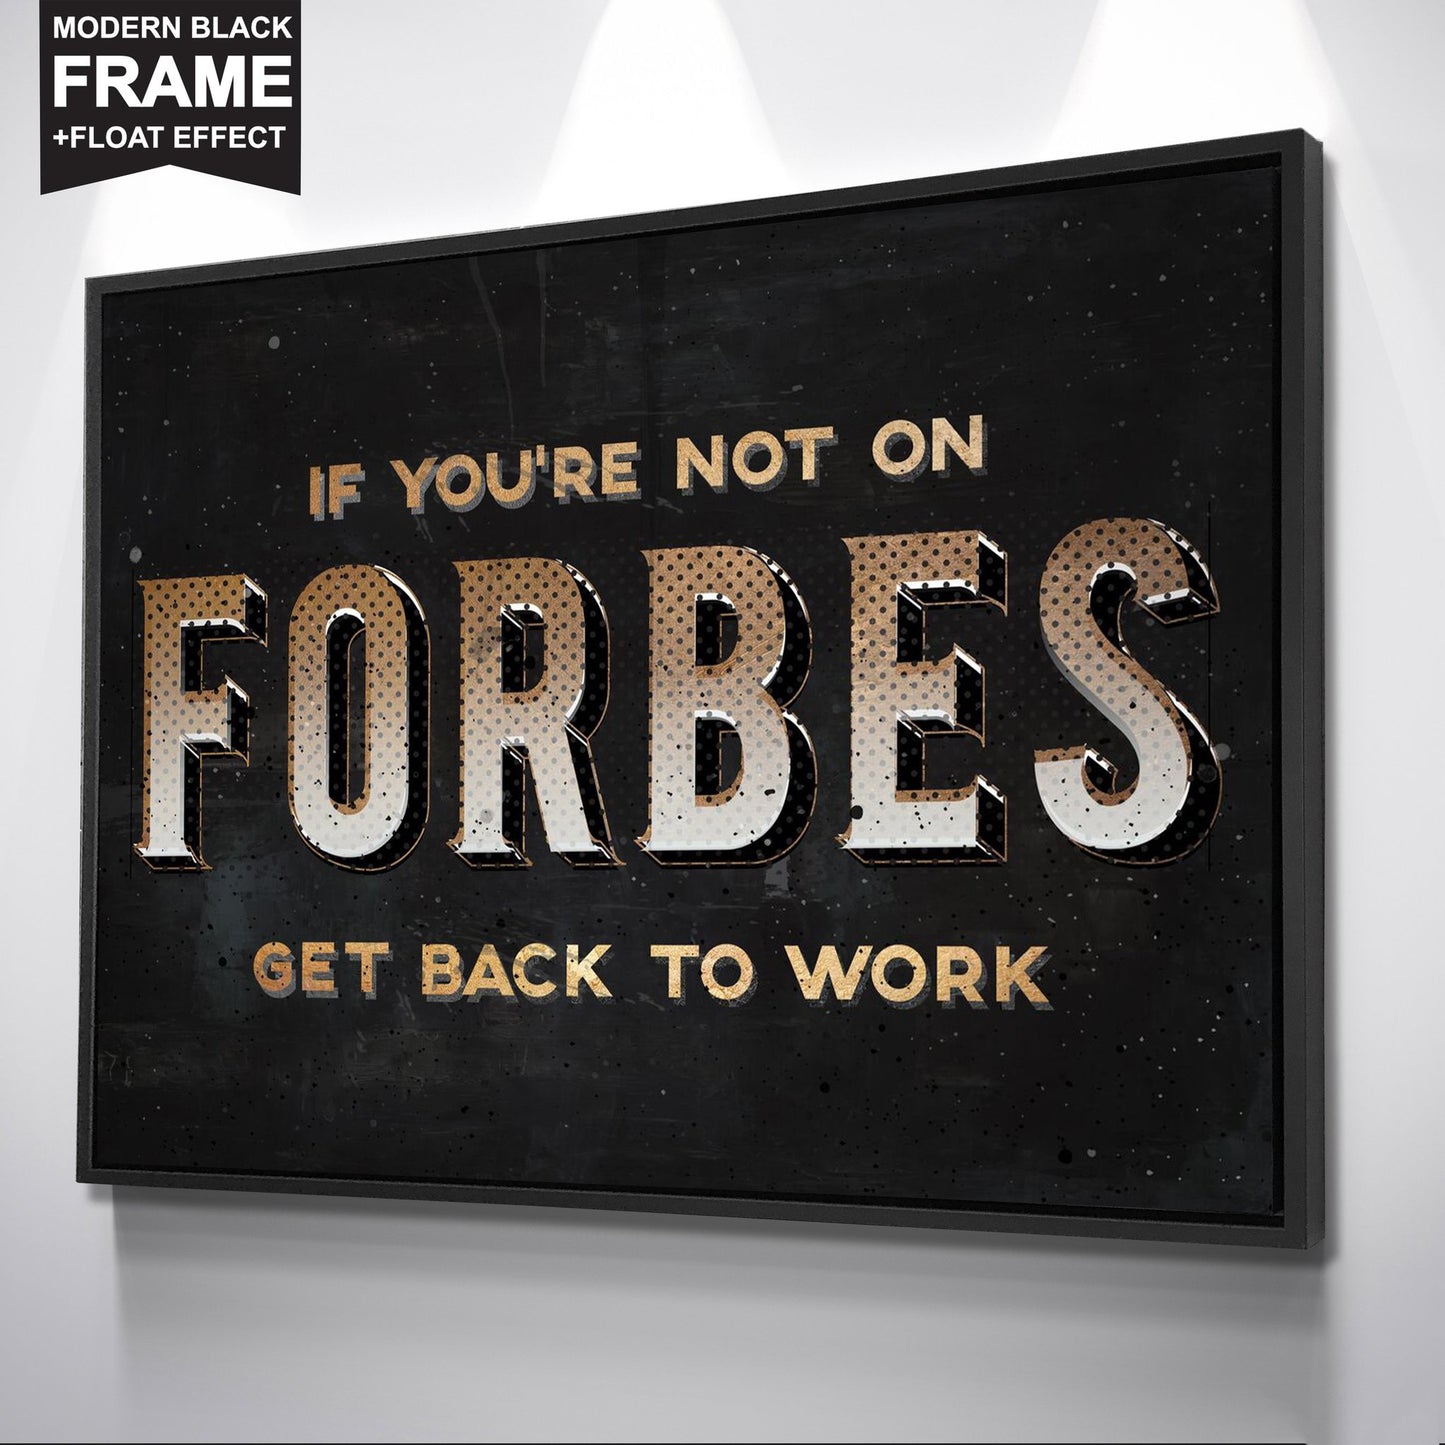 Motivating "Forbes List" Premium Canvas - USTAD HOME